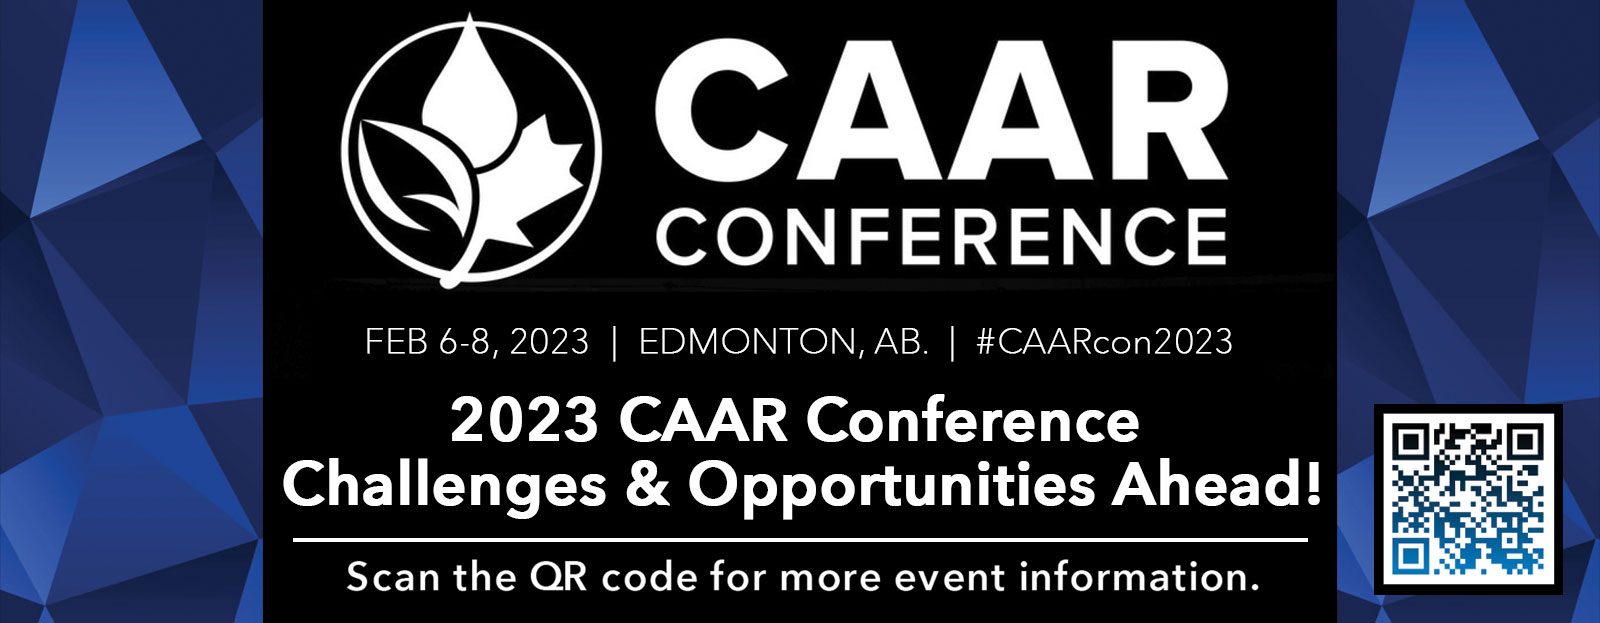 2023 CAAR Conference: Challenges & Opportunities Ahead